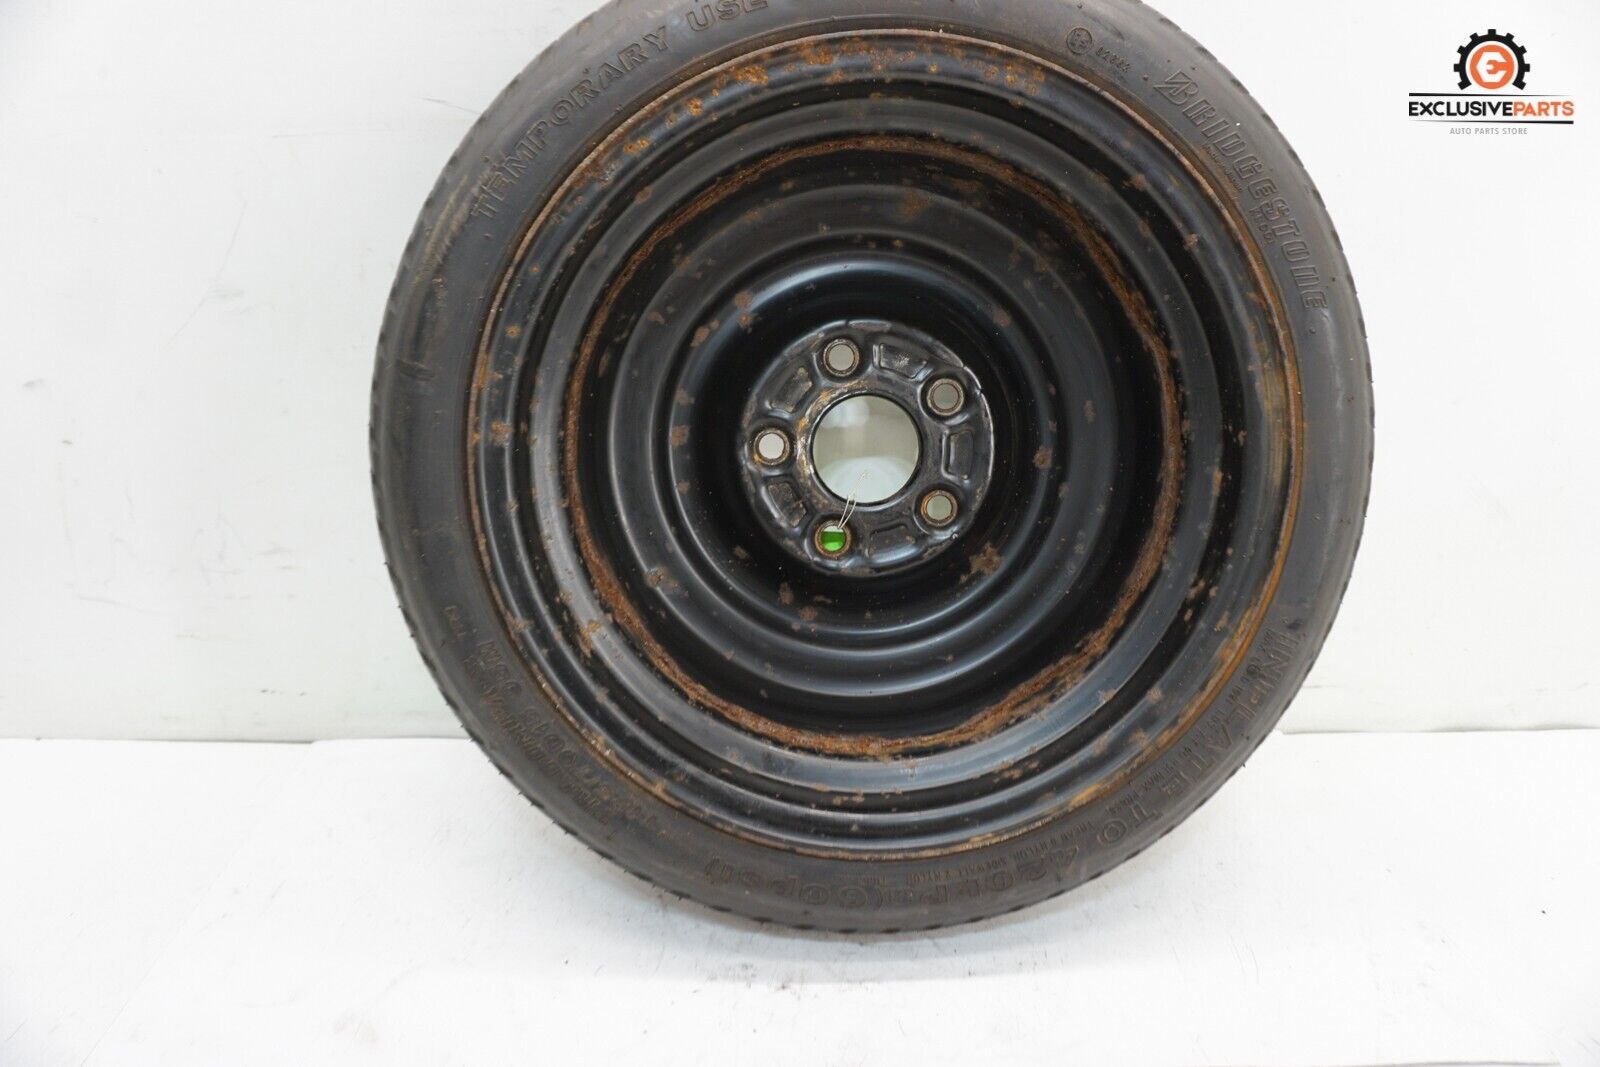 1997-01 Honda Prelude SH OEM Emergency Spare Tire Compact Donut Wheel Rim 5010